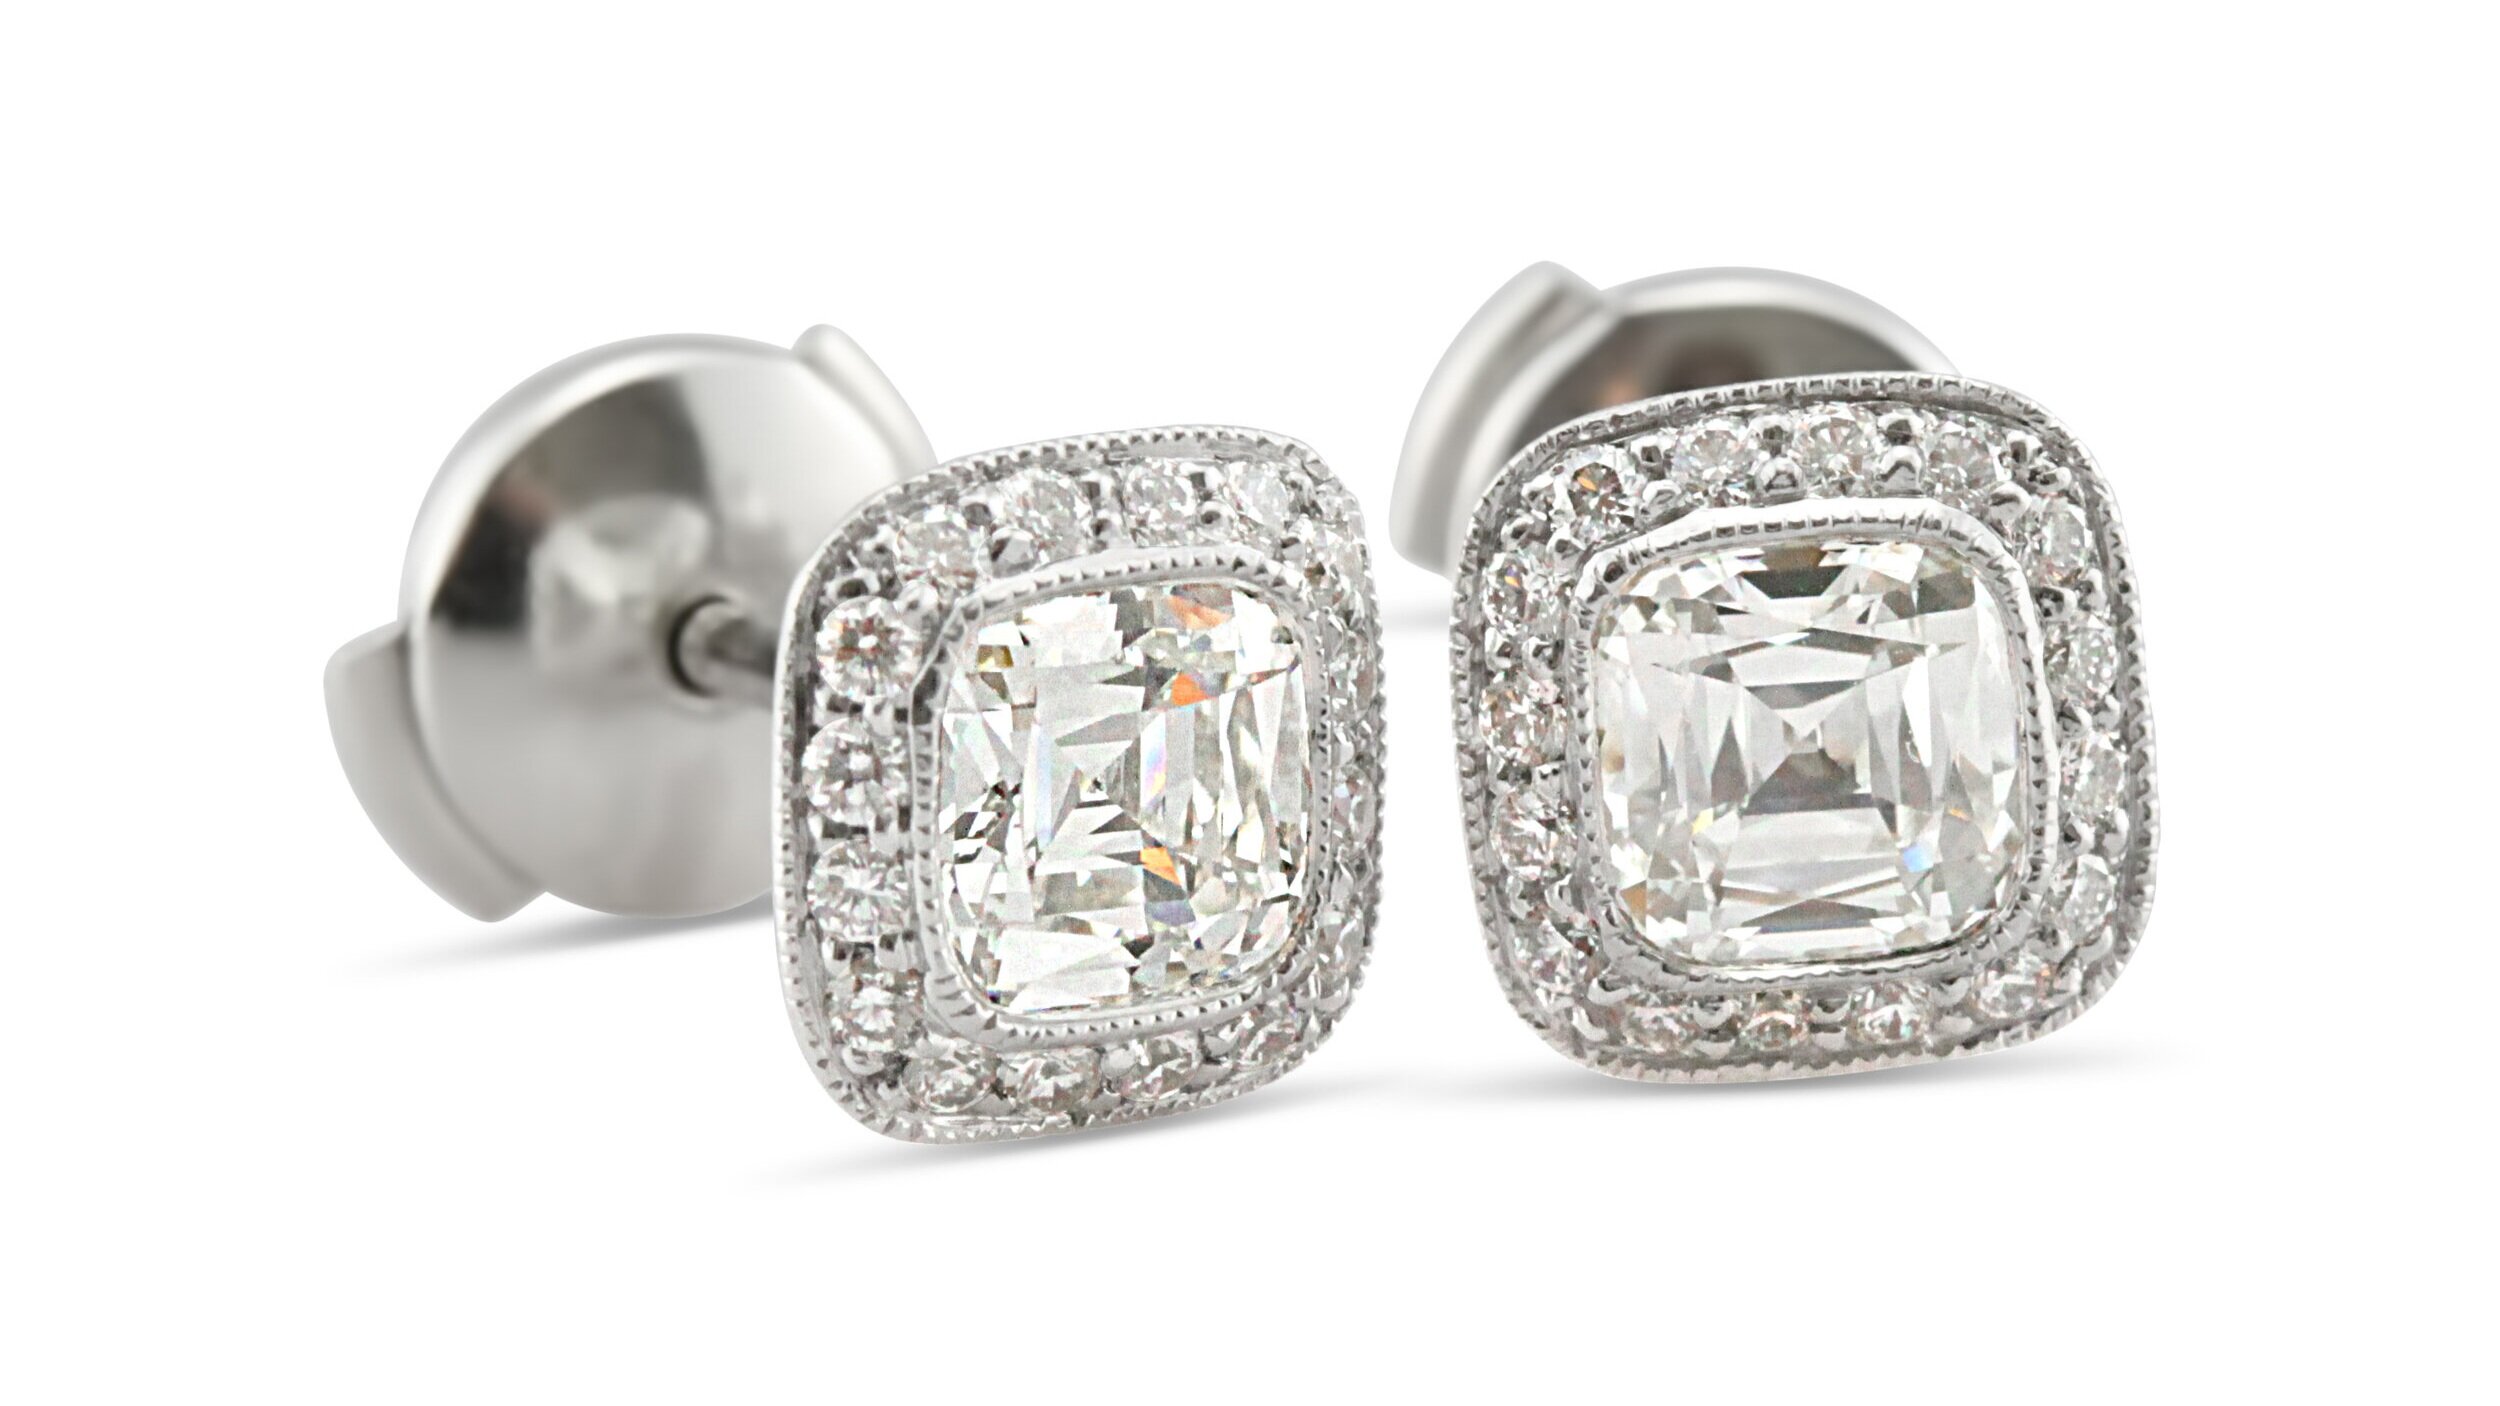 Diamond+and+Platinum+Earrings+by+Tiffany_5888.jpg